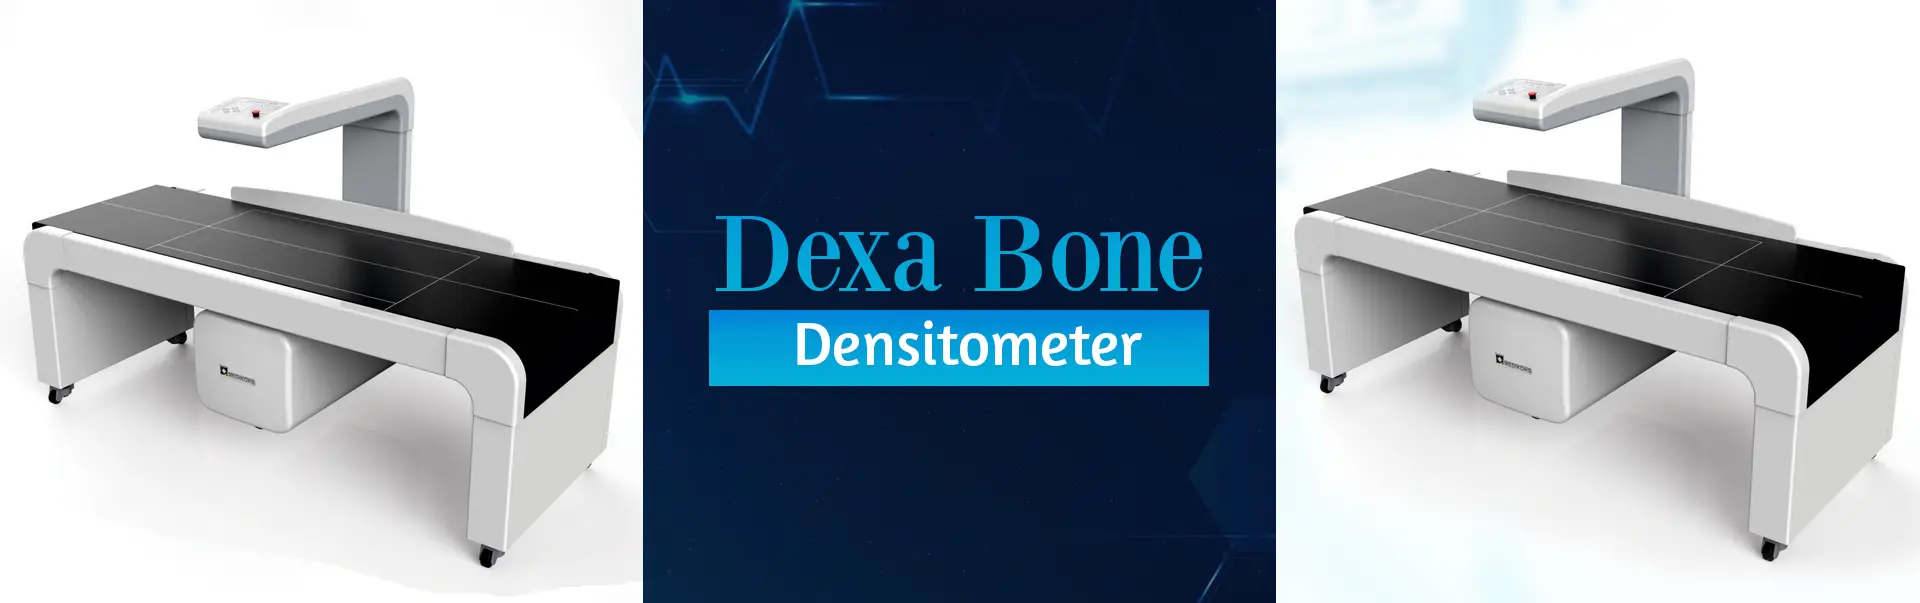 Dexa Bone Densitometer Manufacturers in Chennai